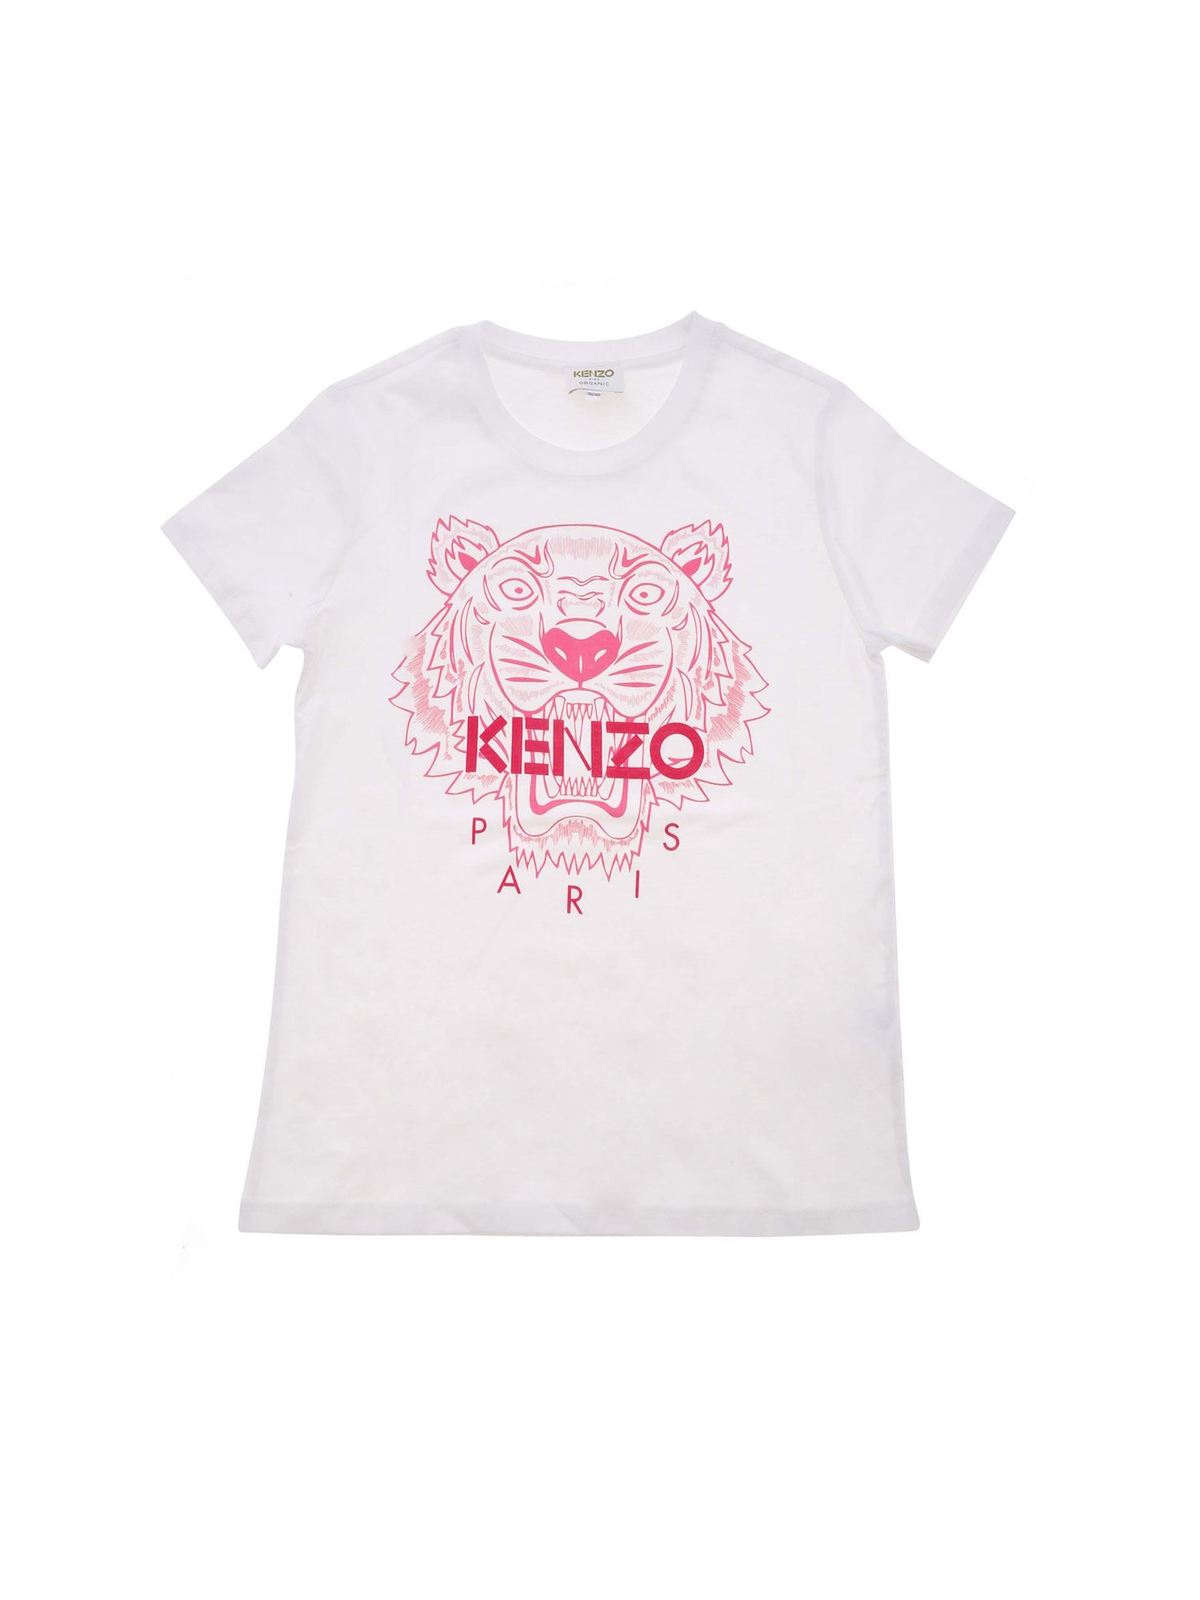 Tシャツ Kenzo - Tシャツ - 白 - KR1023801P | THEBS [iKRIX]